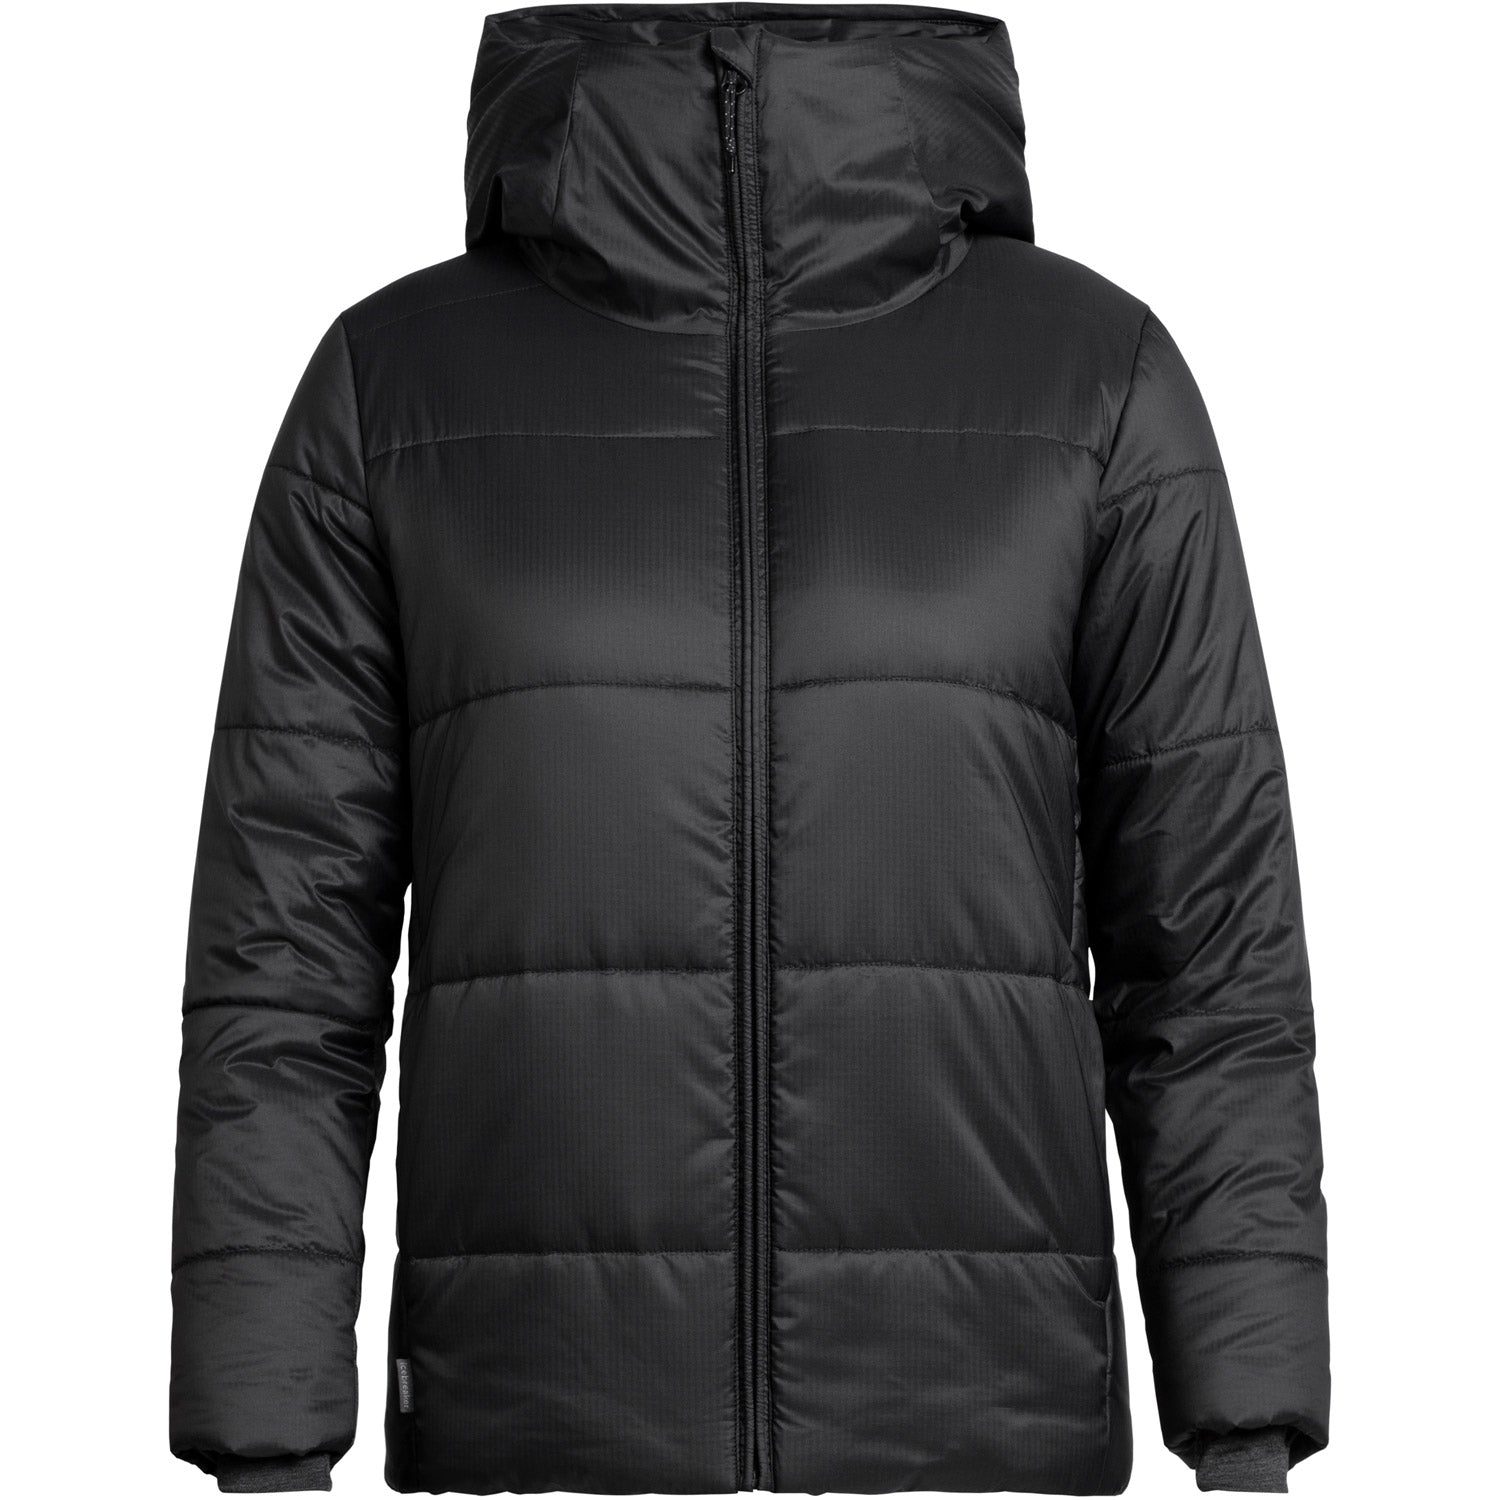 Icebreaker Collingwood Hooded Ladies Jacket 2021